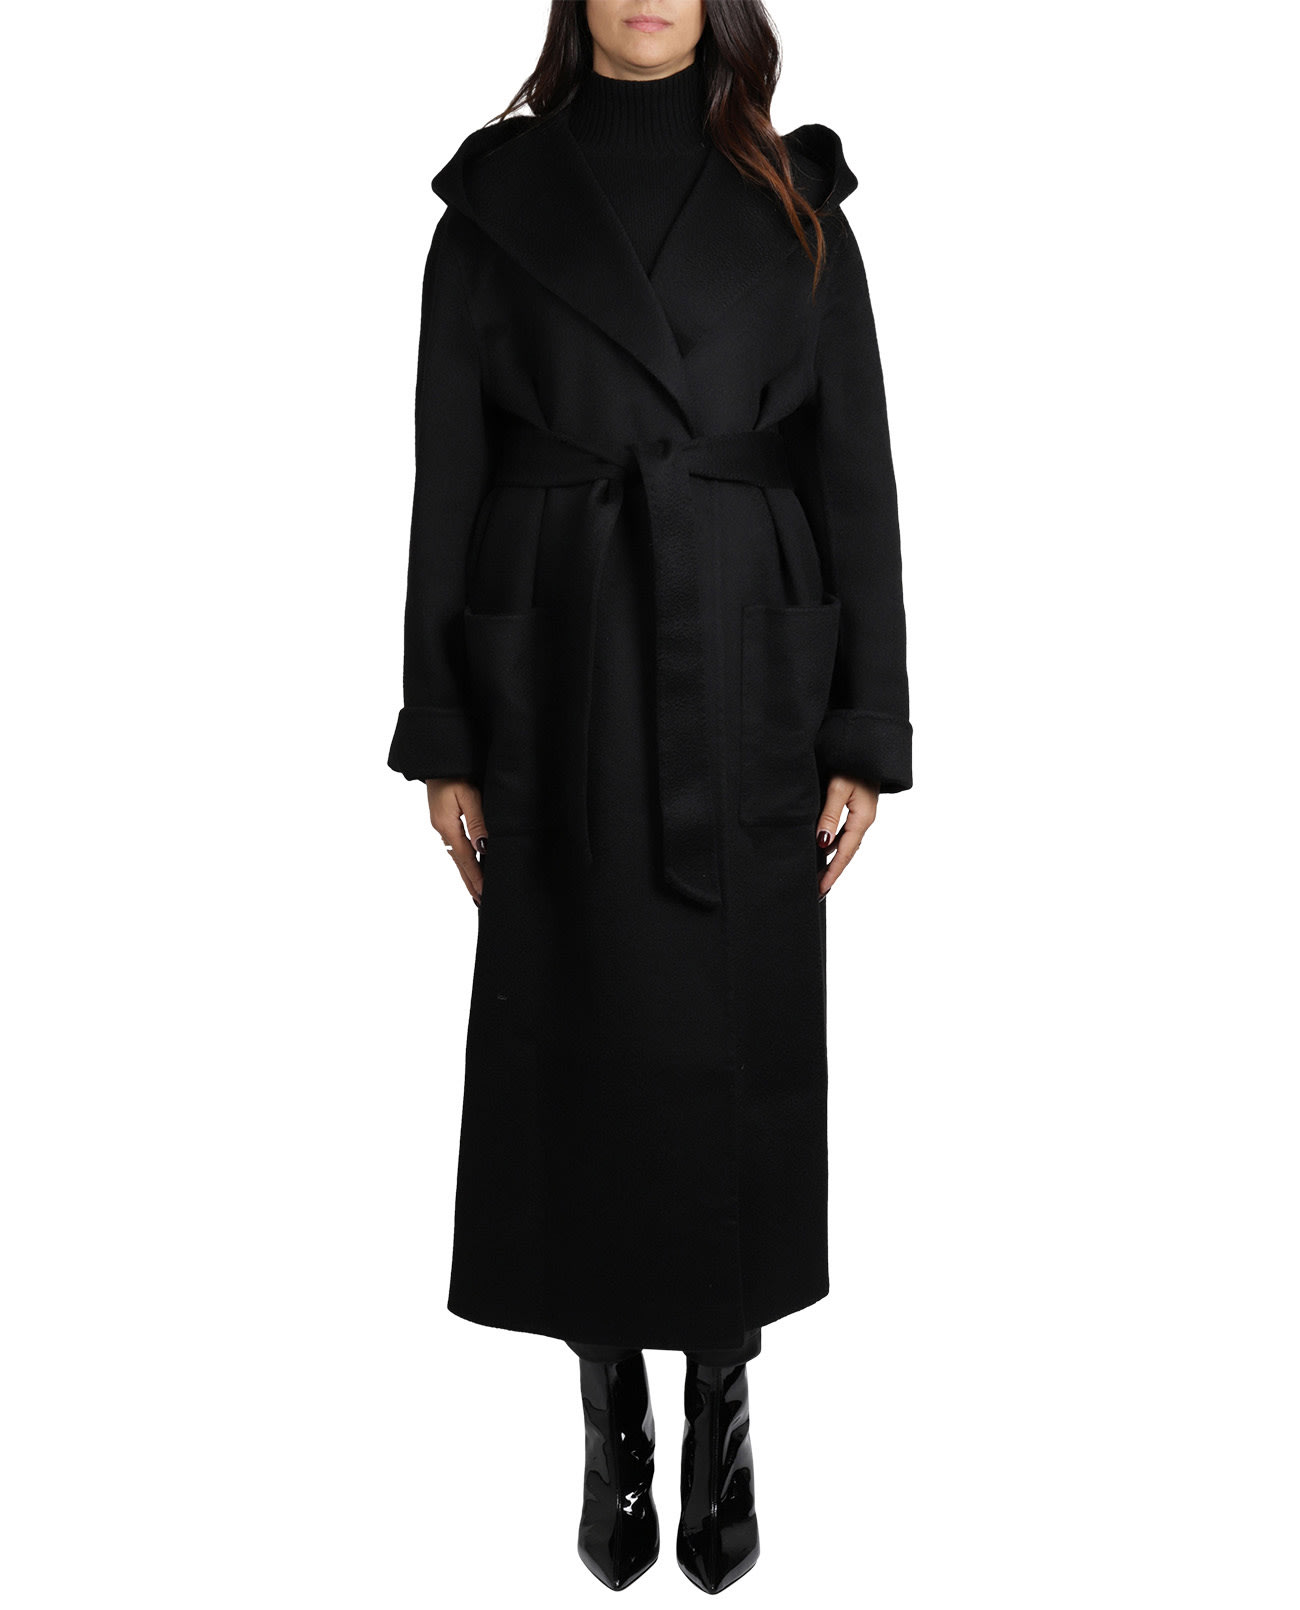 Sorelle Secli Black Long Coat